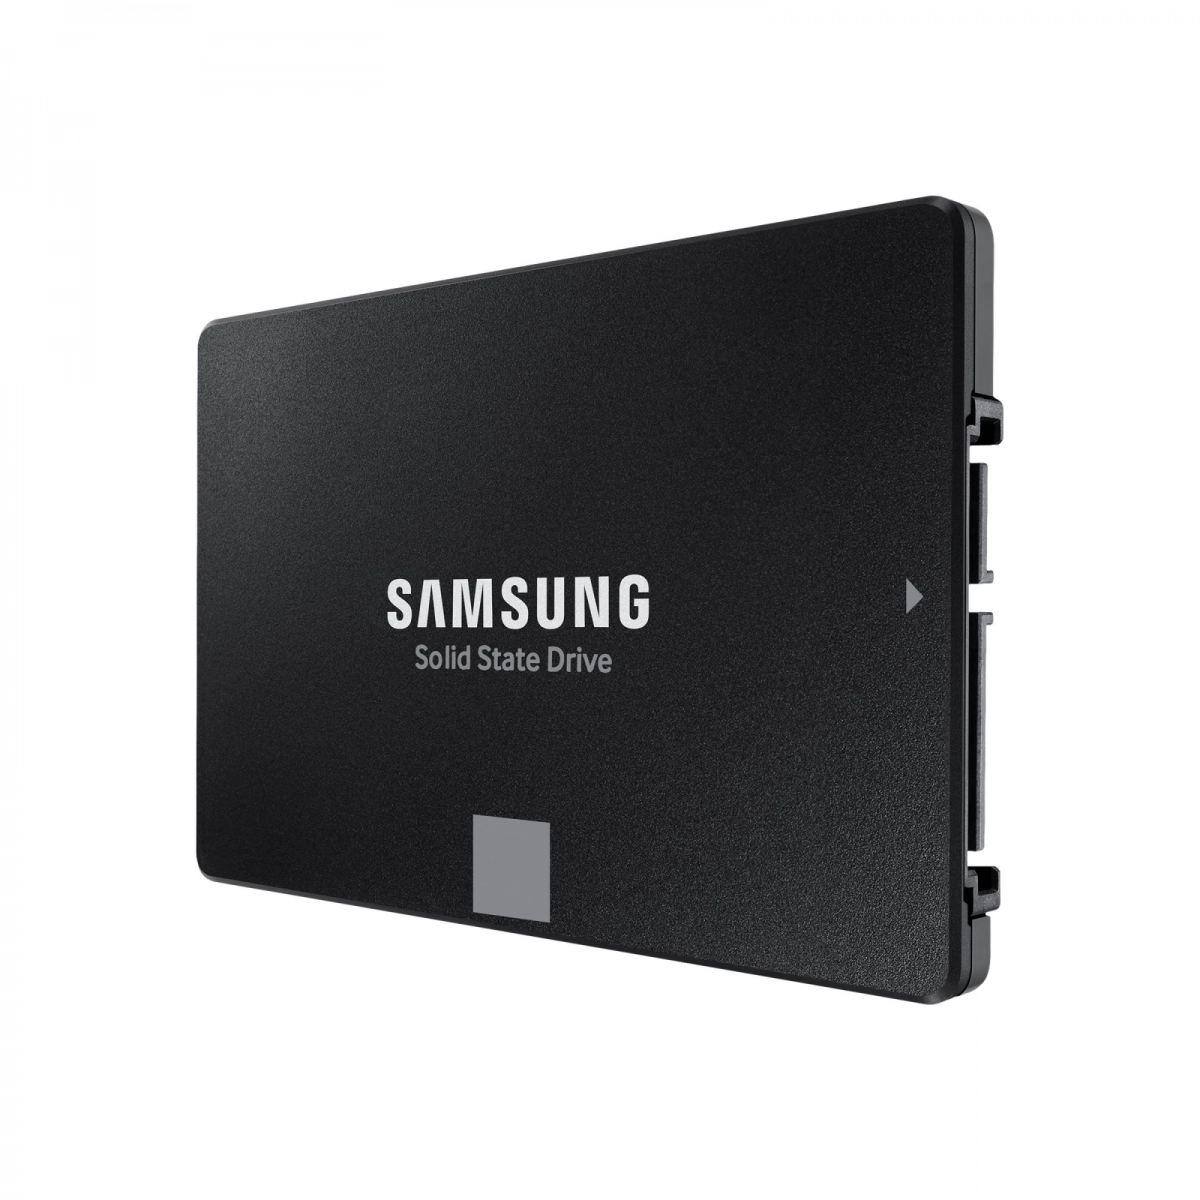 Notebook-Festplatte 1TB, SSD SATA3 für MEDION Akoya E6412T MD99450